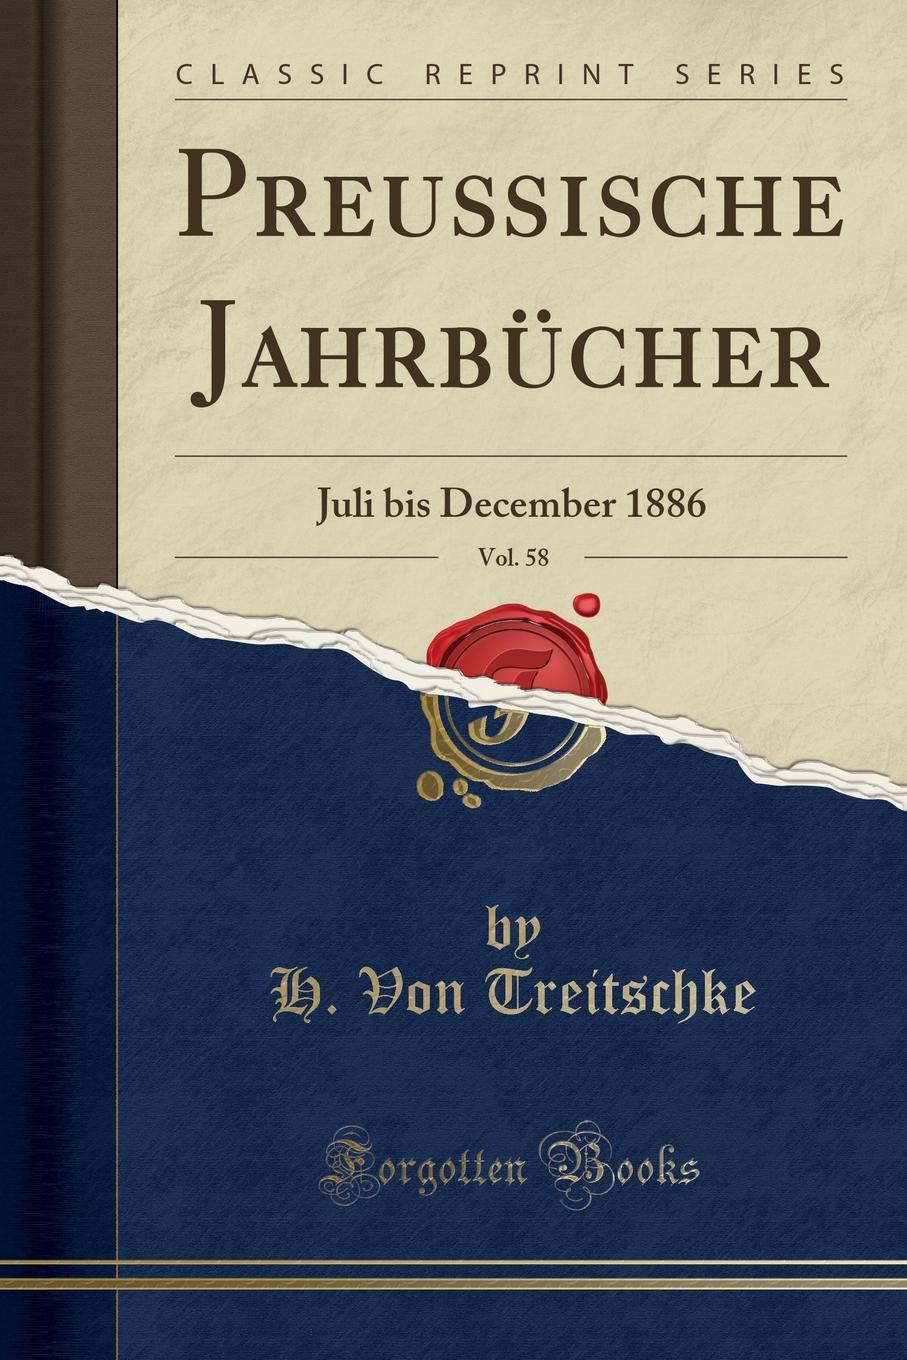 Preussische Jahrbucher, Vol. 58. Juli bis December 1886 (Classic Reprint)